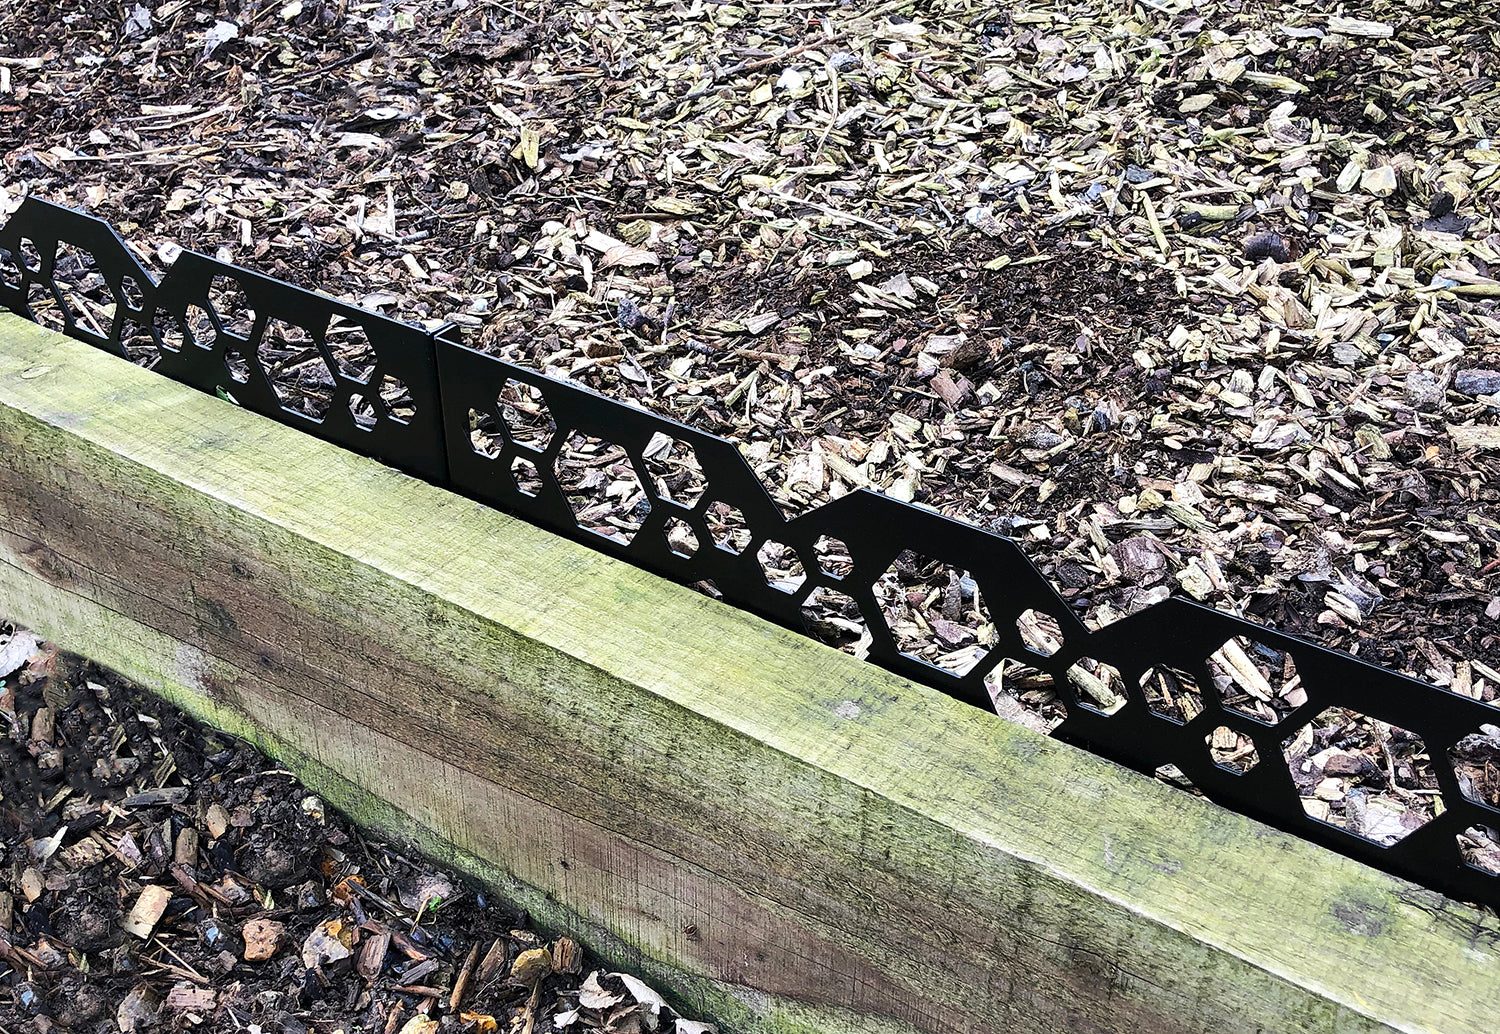 Decorative Geometric Garden Steel Picket Fence Panels